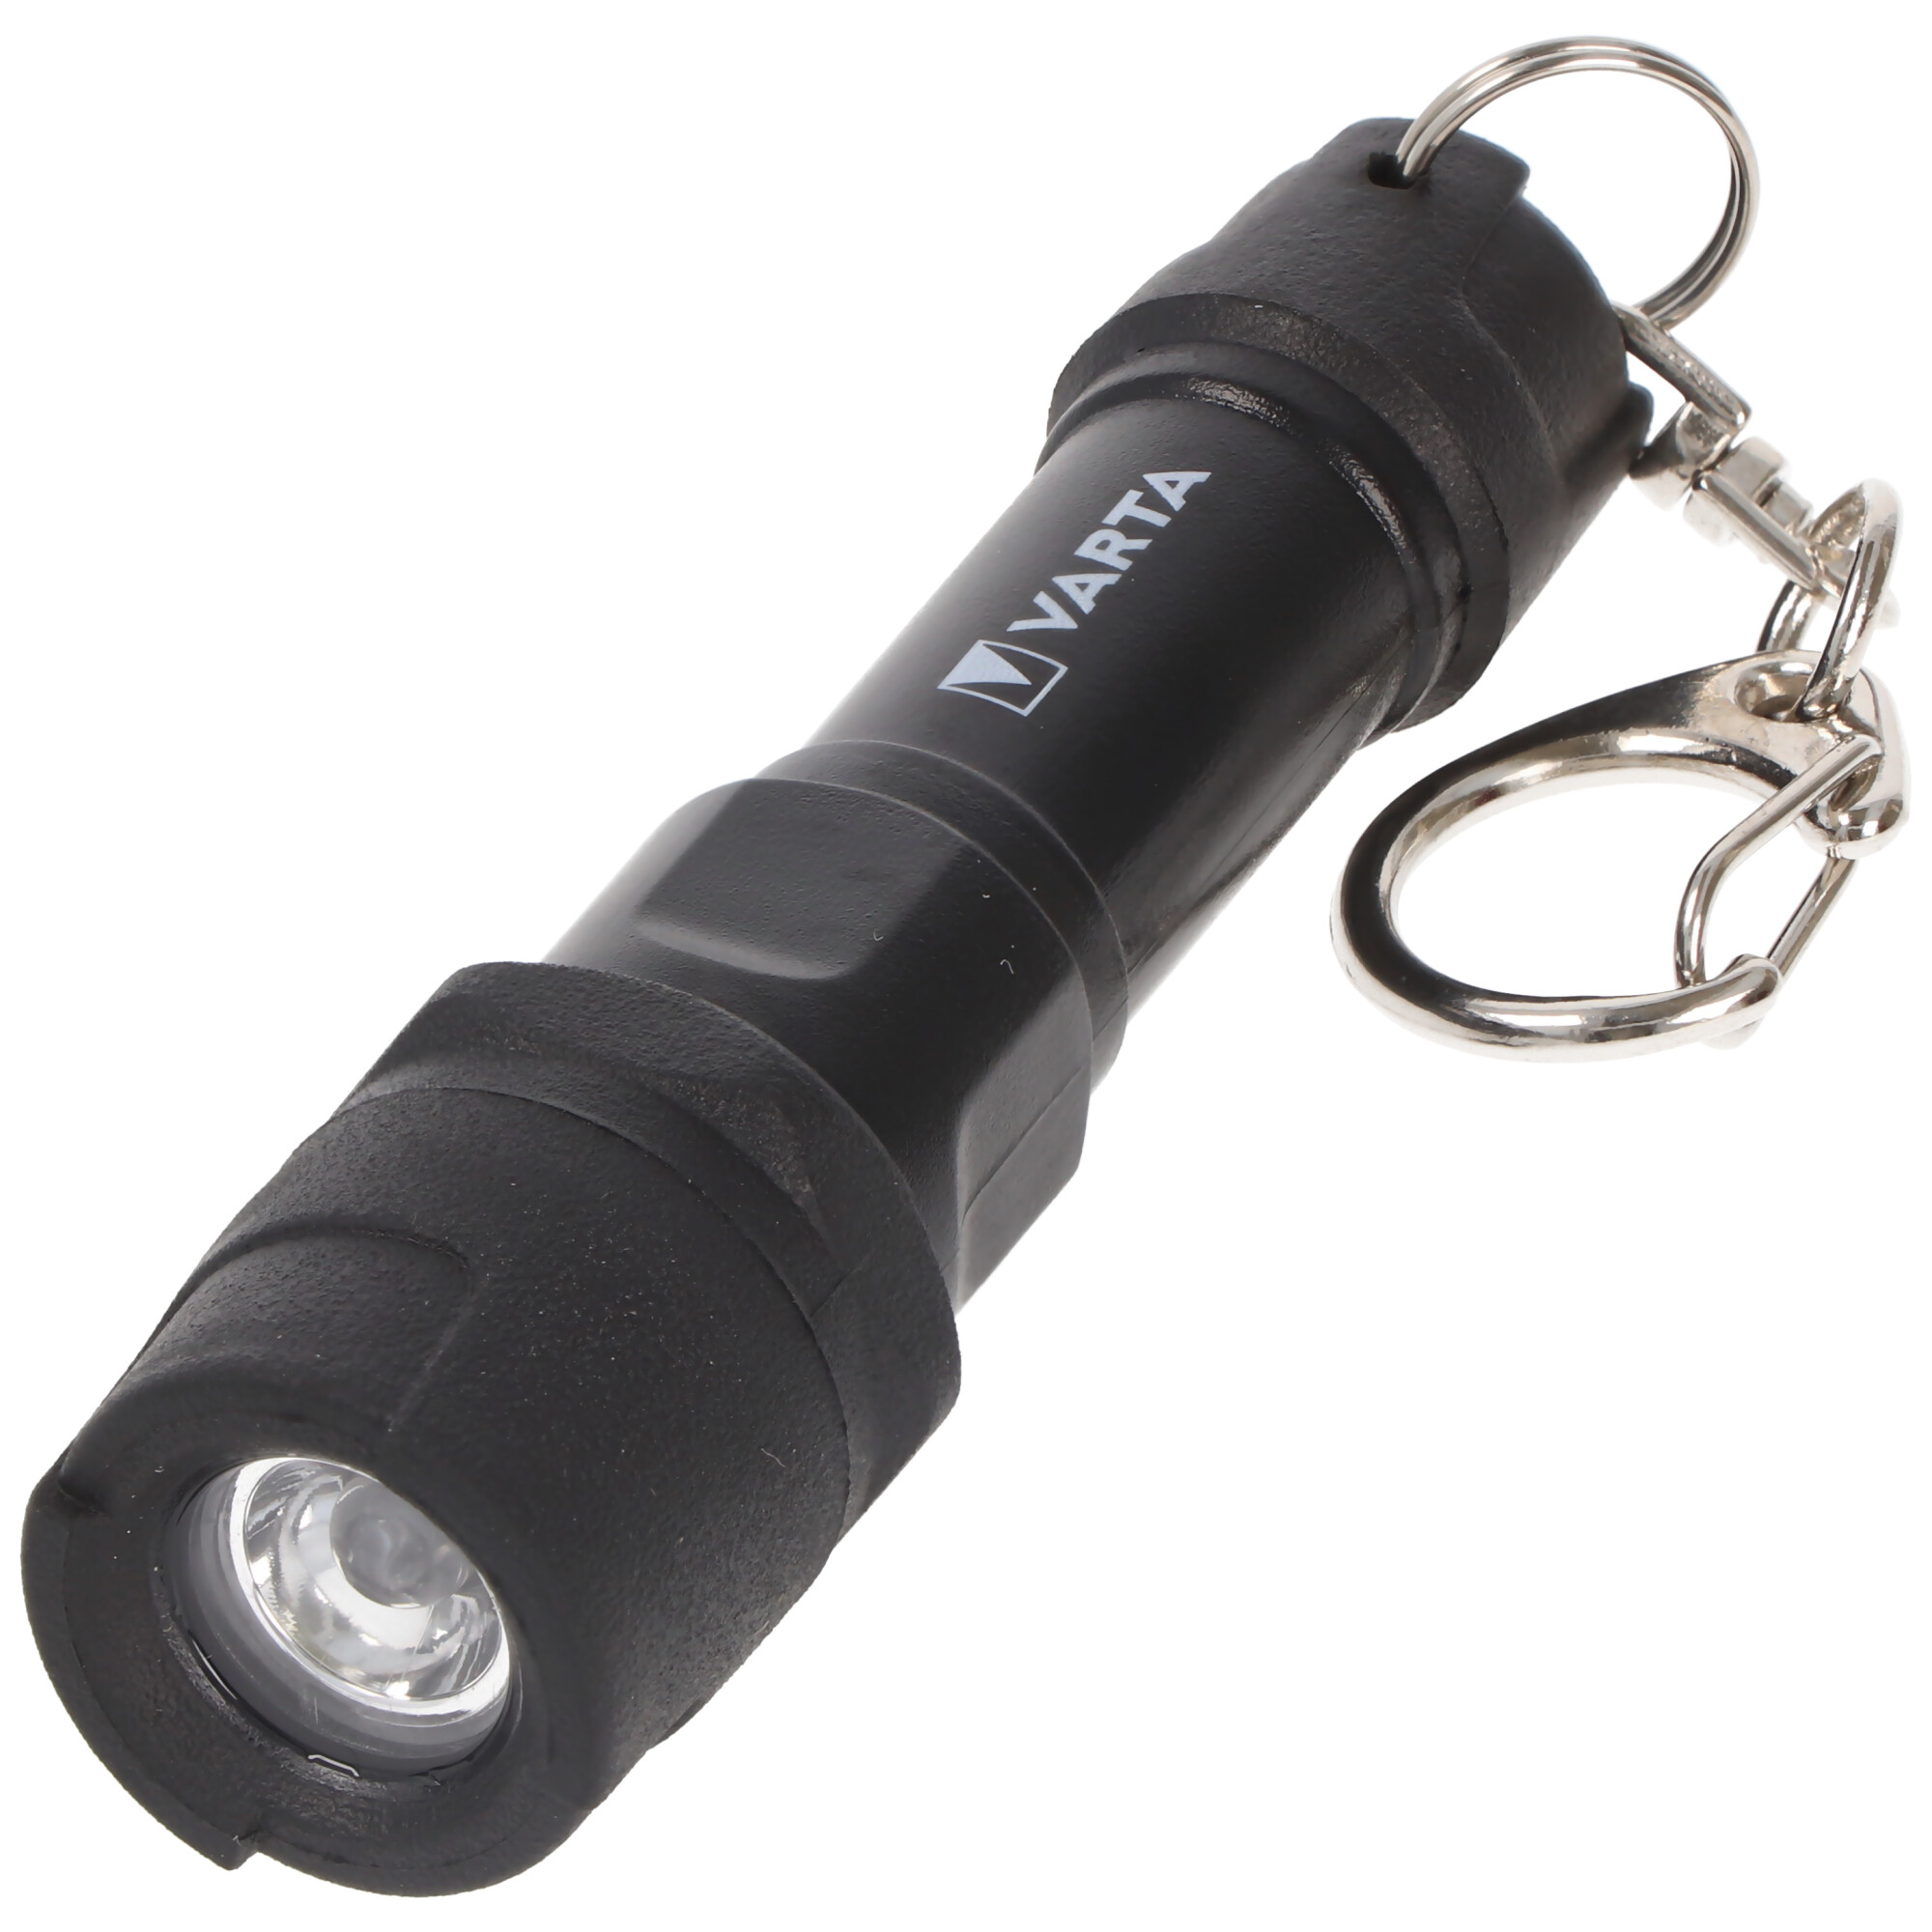 Varta LED Taschenlampe Indestructible, Key Chain Light 12lm, inkl. 1x  Batterie Alkaline AAA, Retail Blister | LED-Taschenlampen | LEDs, Taschenlampen, Lichttechnik | Akkushop